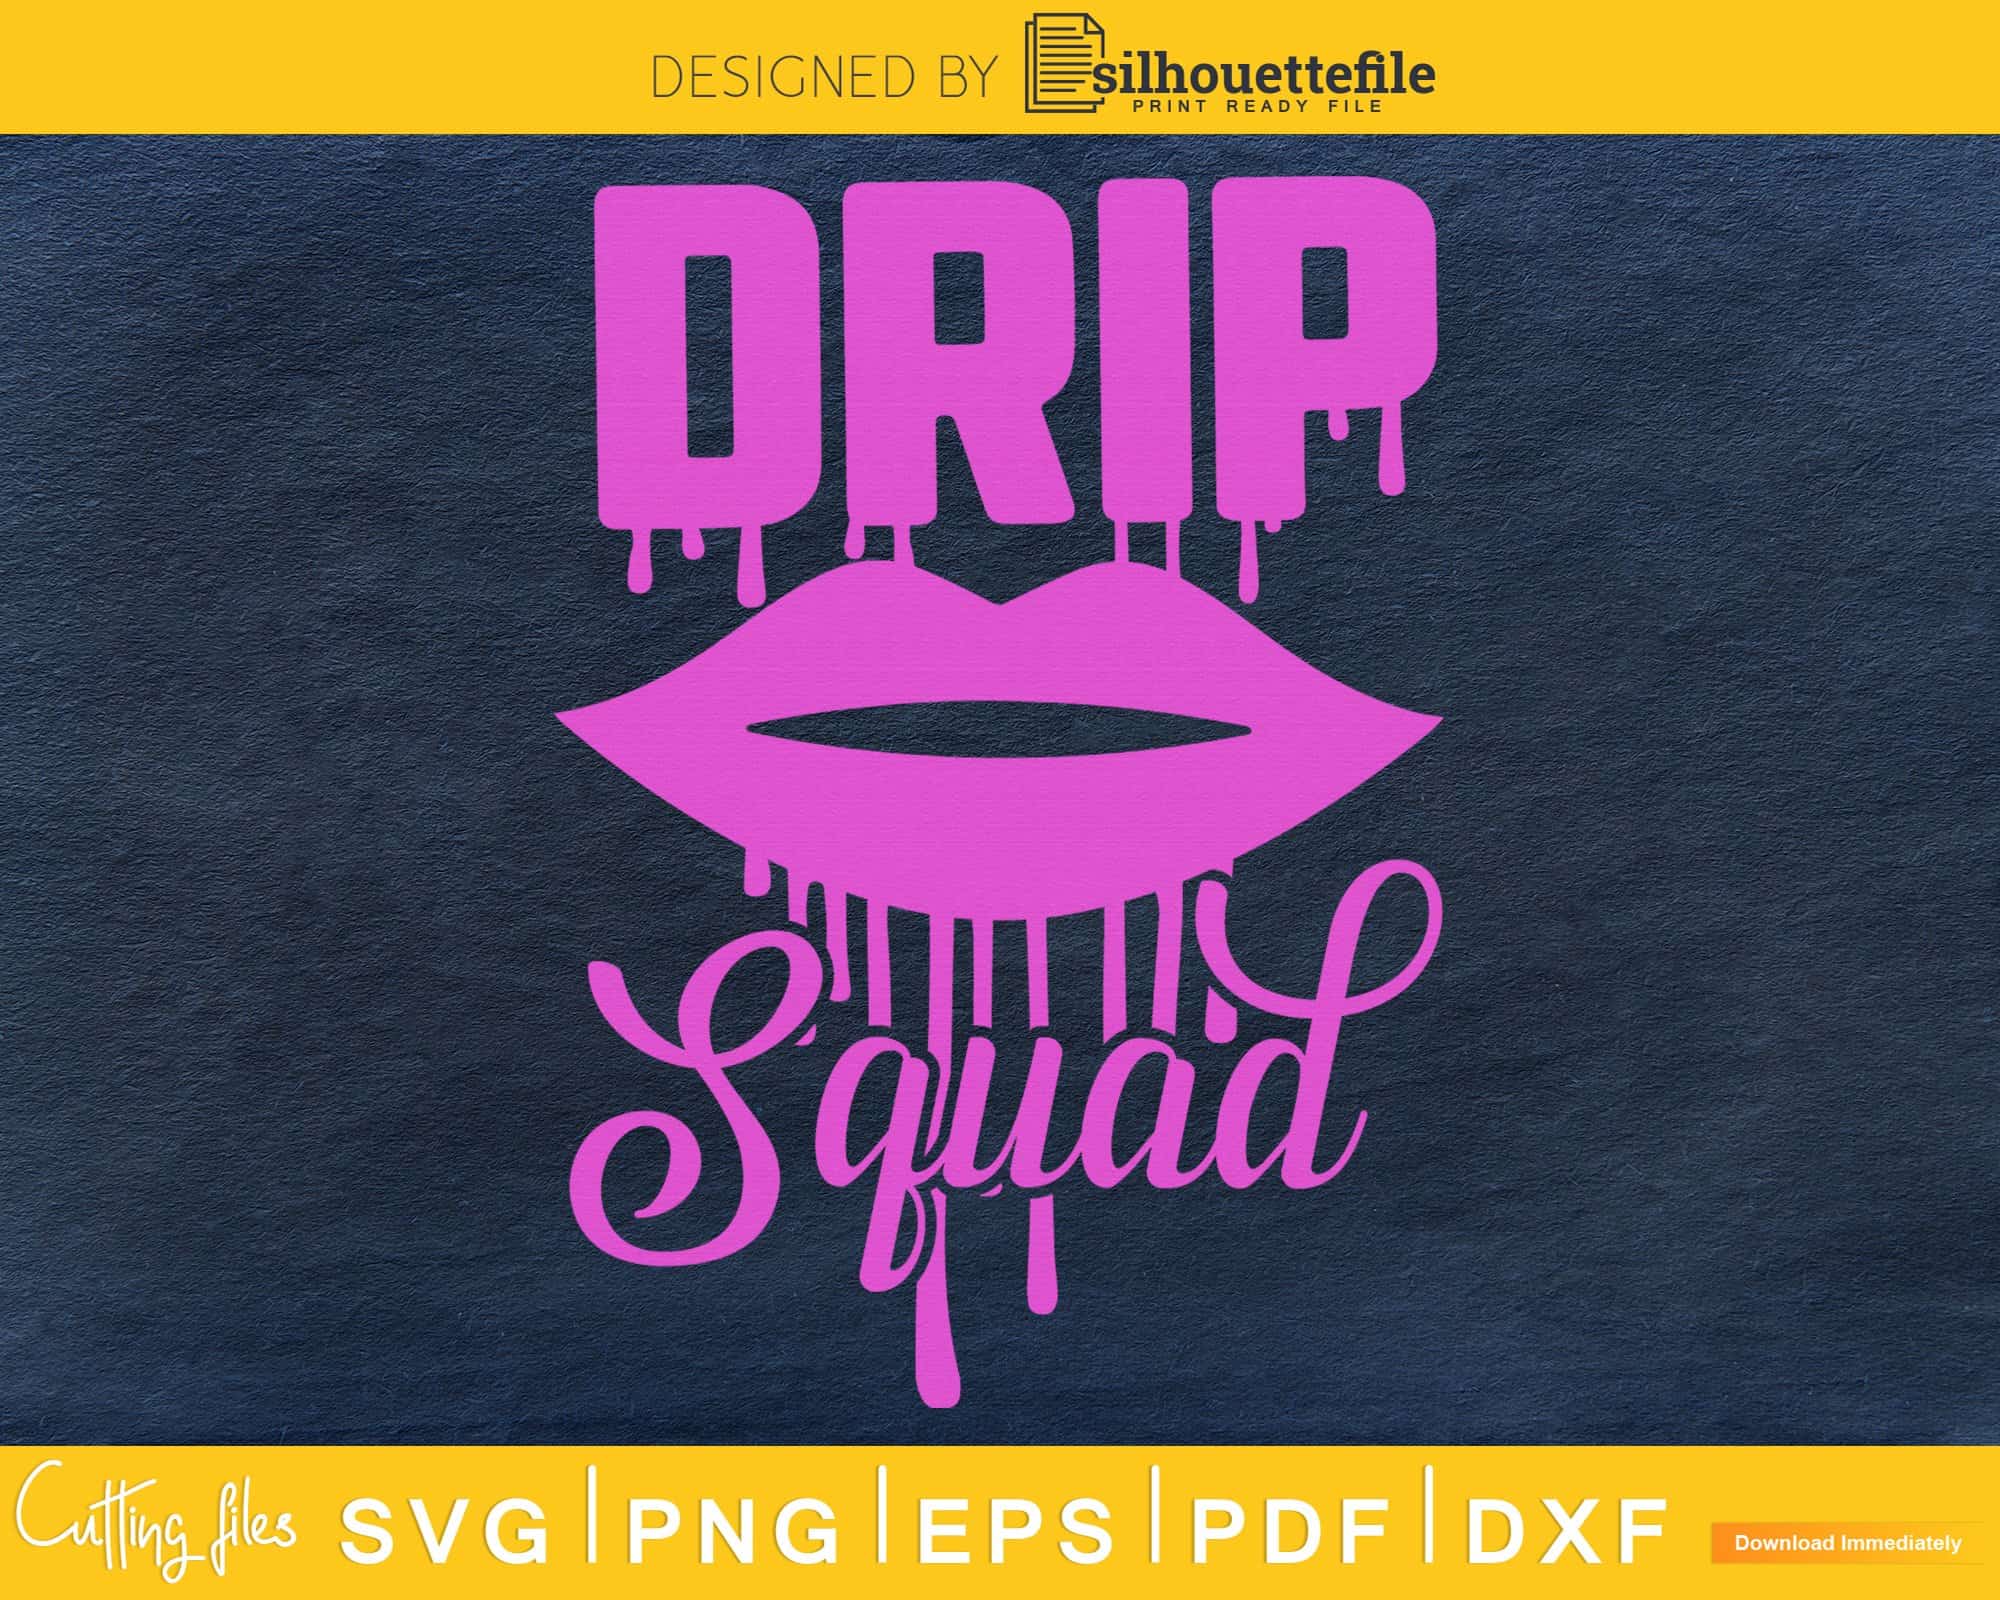 Drip Dripping SVG, Drip Cut File Svg, Drip Shirt Svg, Drip Design Shirt Svg  Cut File For Silhouette, Cricut Machines Svg, Dxf, Png, Pdf